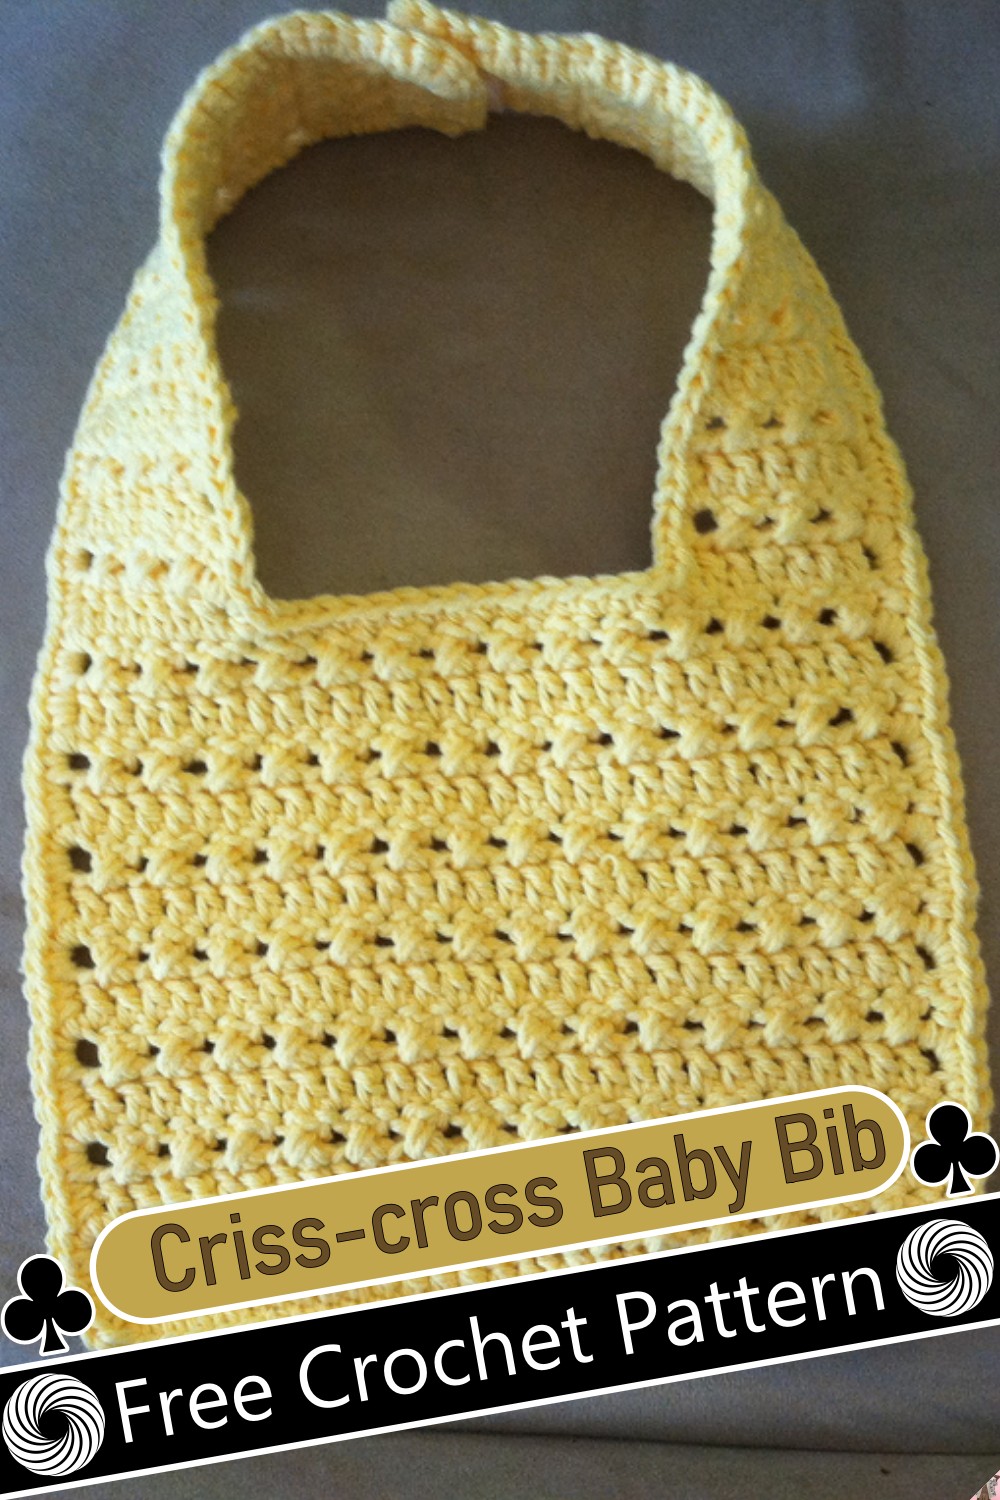 Criss-cross Baby Bib